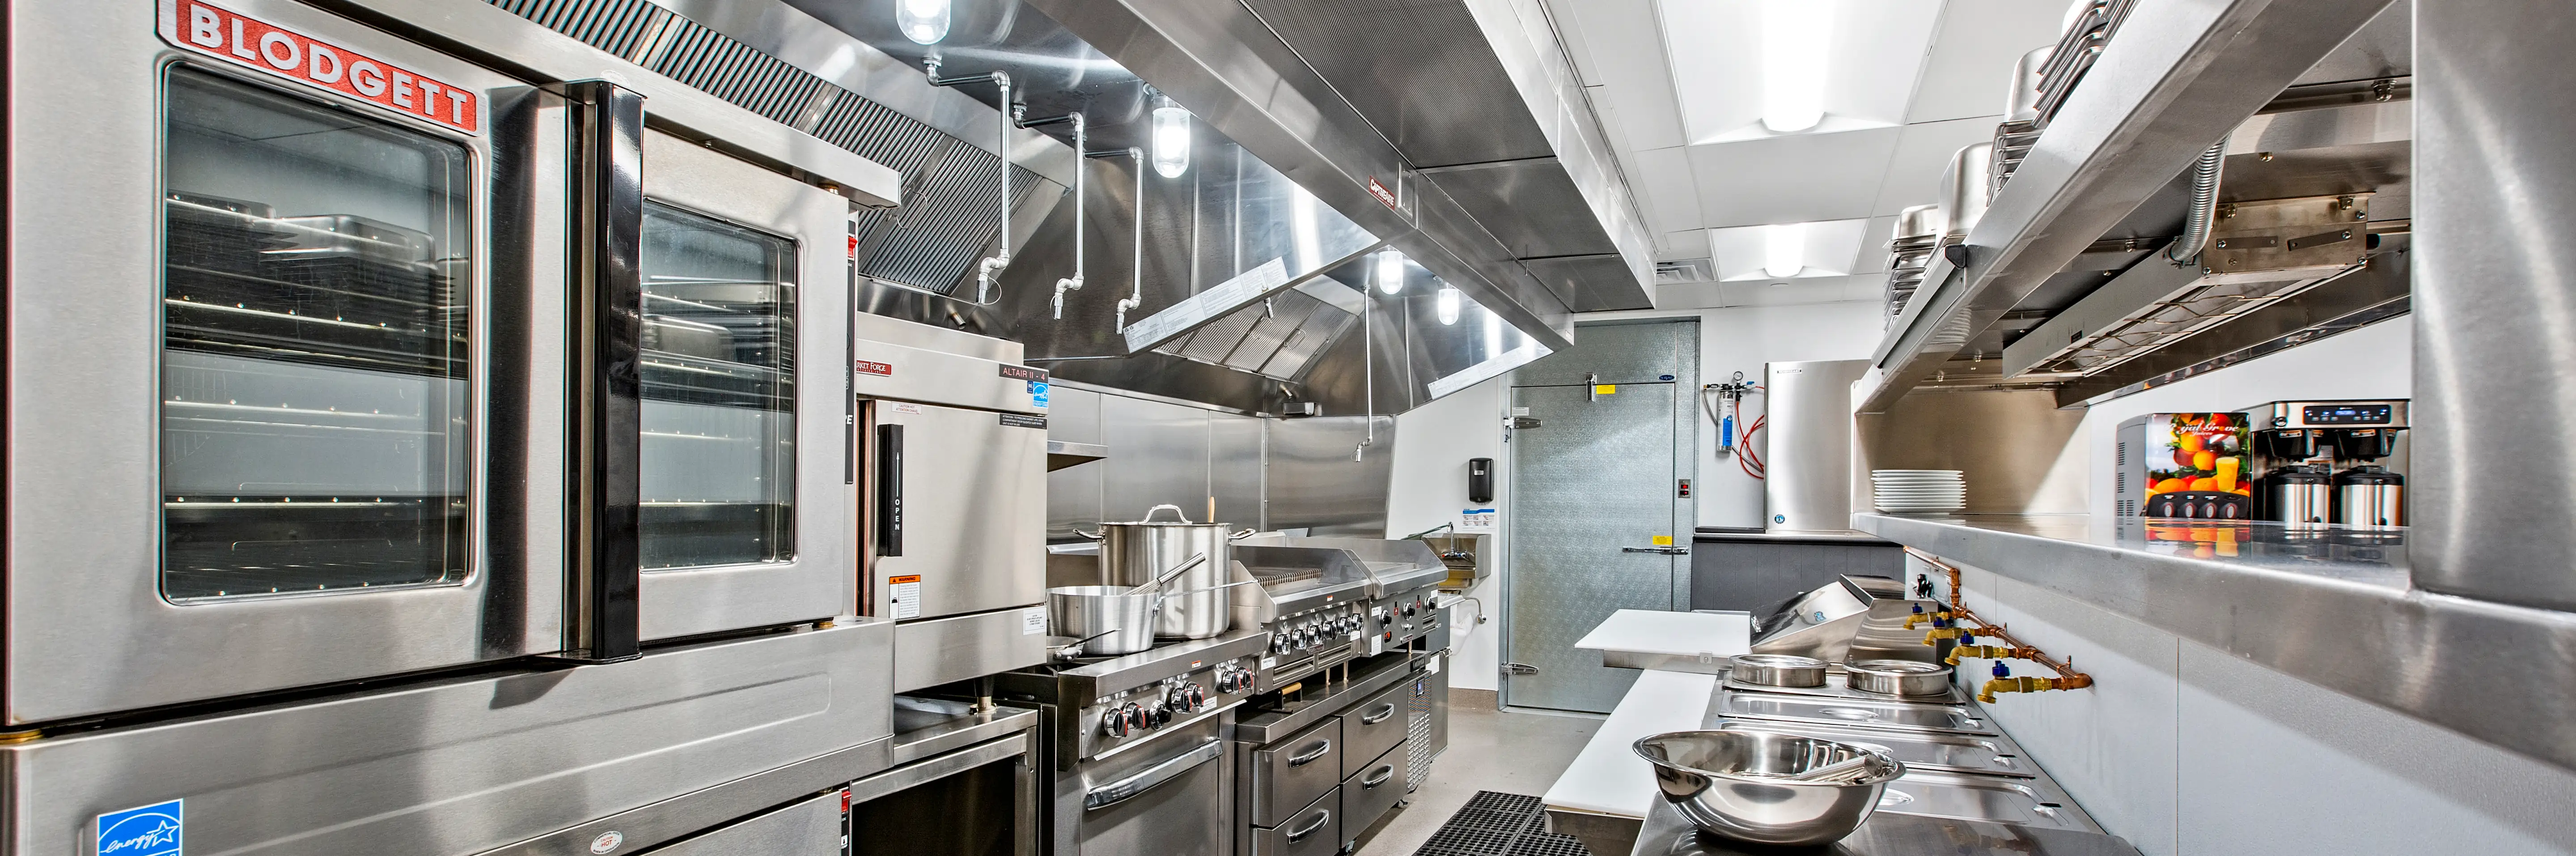 State of the art kitchen located at Aqua Ridge of Montclair.